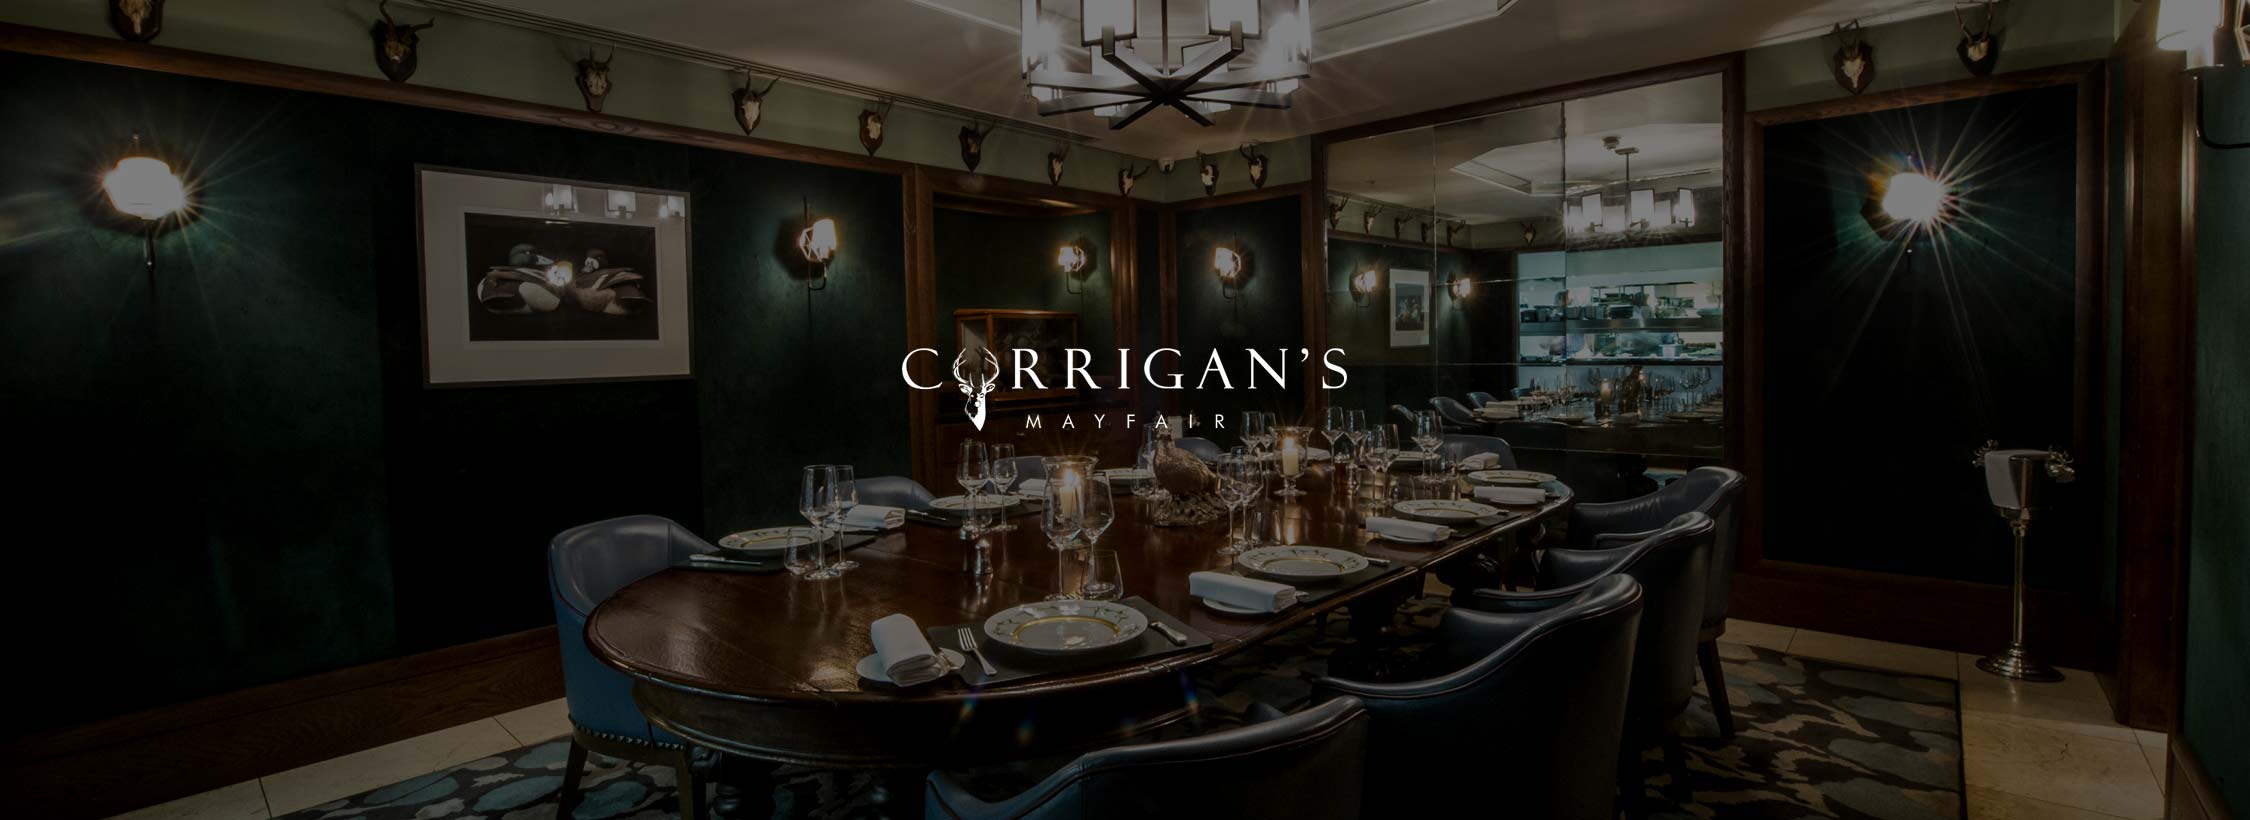 restaurants-supplied-corrigans-mayfair-bg